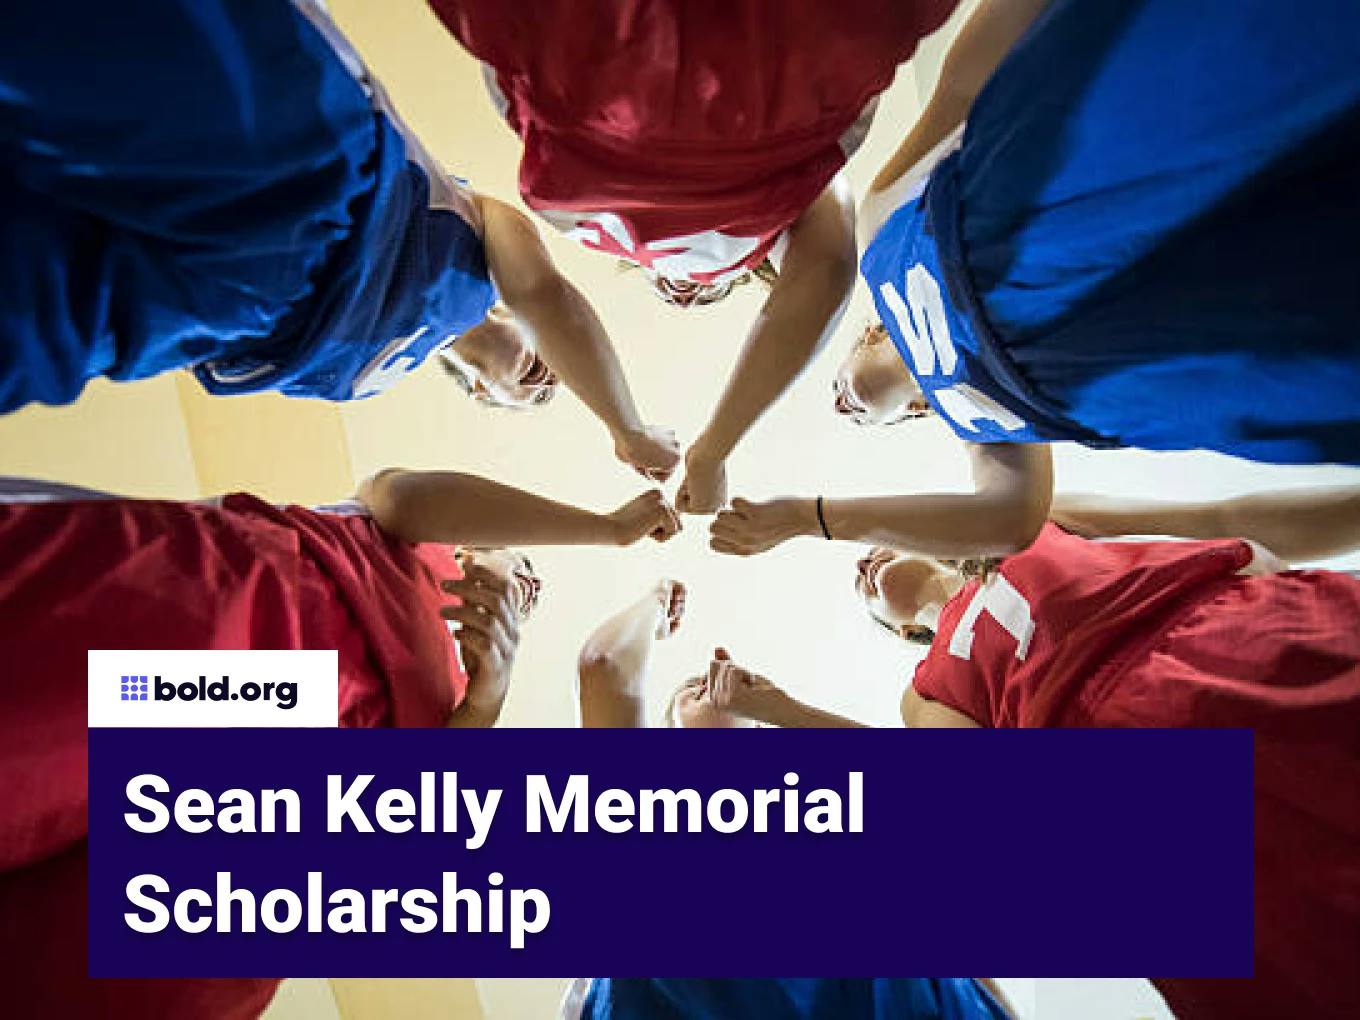 Sean Kelly Memorial Scholarship